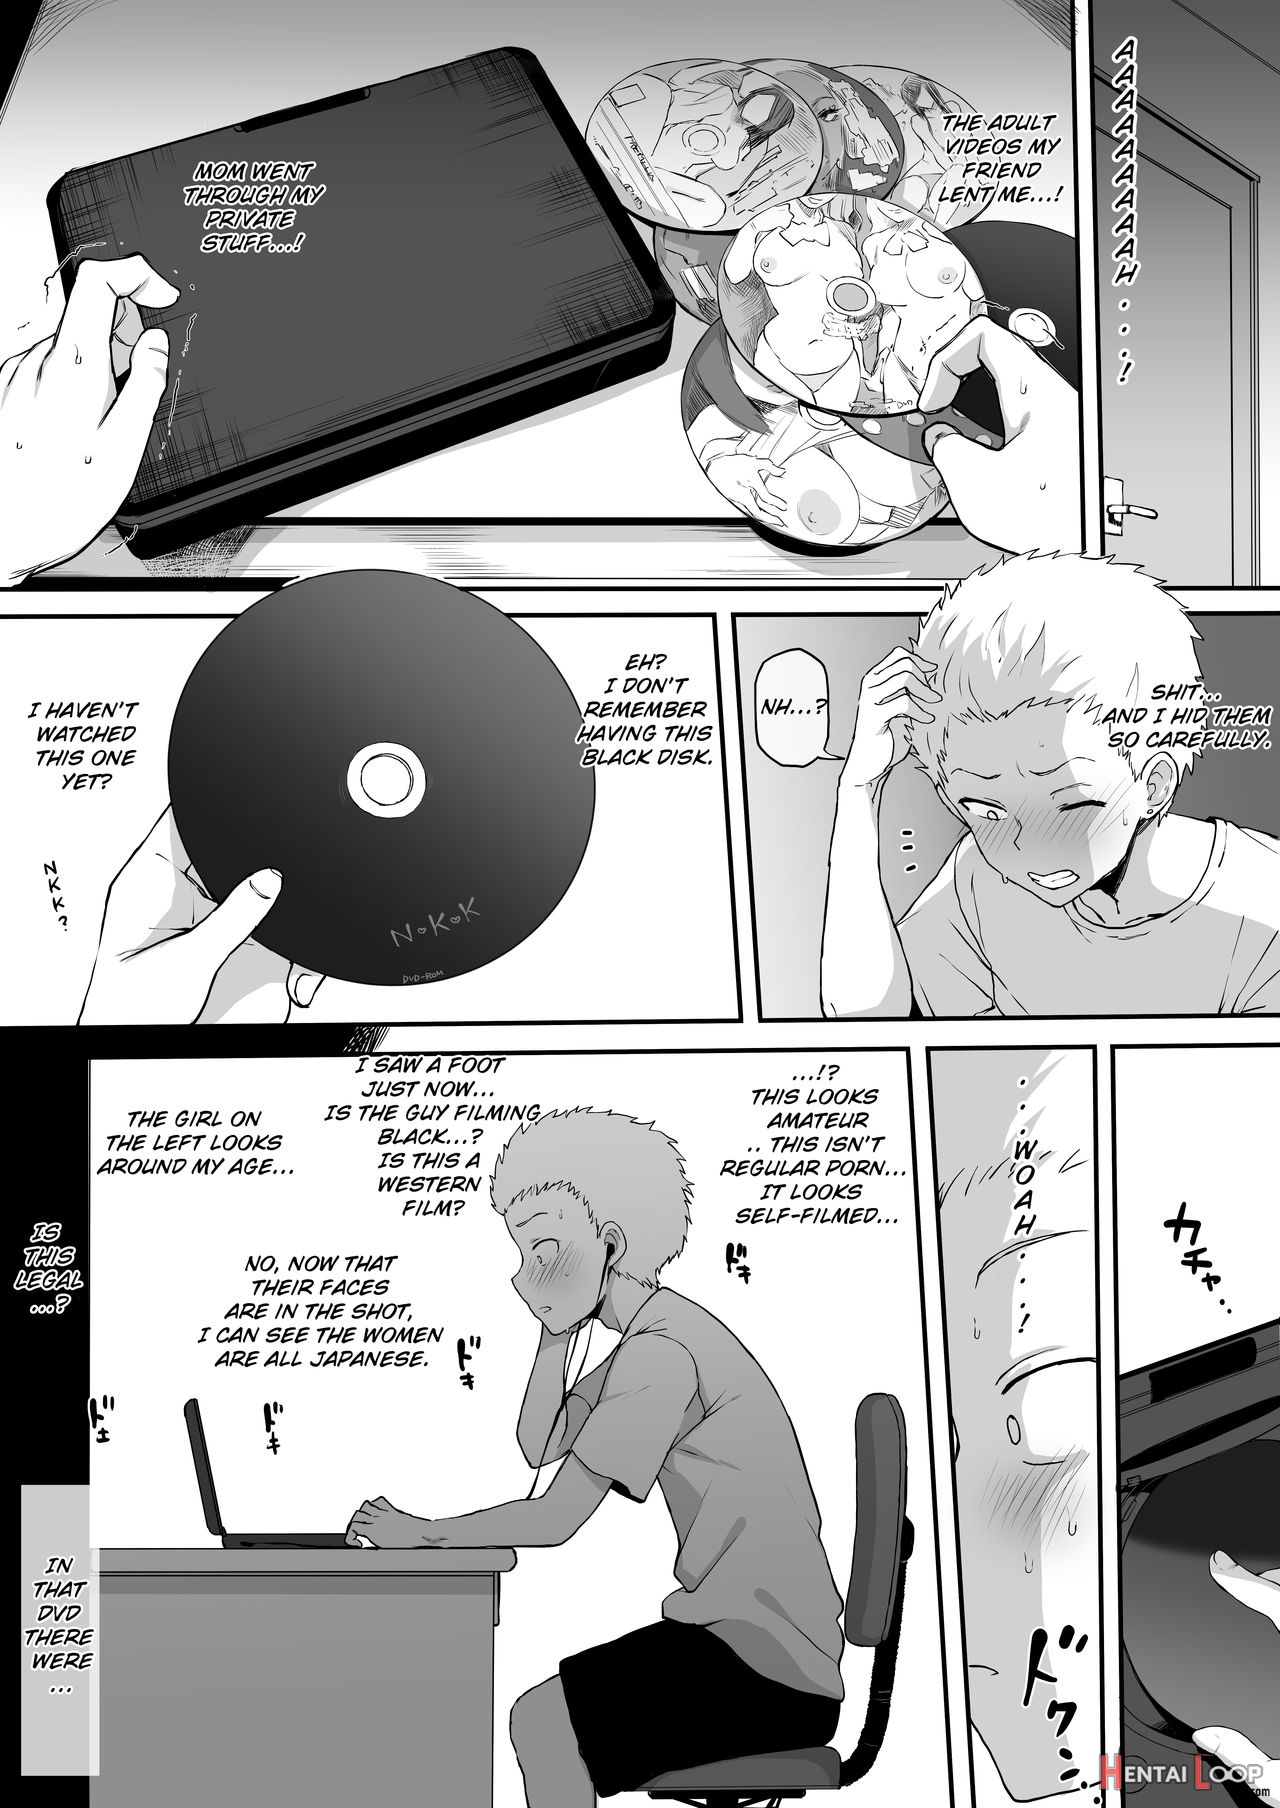 Kokujin No Tenkousei Ntr Ru Chapters 1-6 Part 1 Plus Bonus Chapter: Stolen Mother’s Breasts page 29